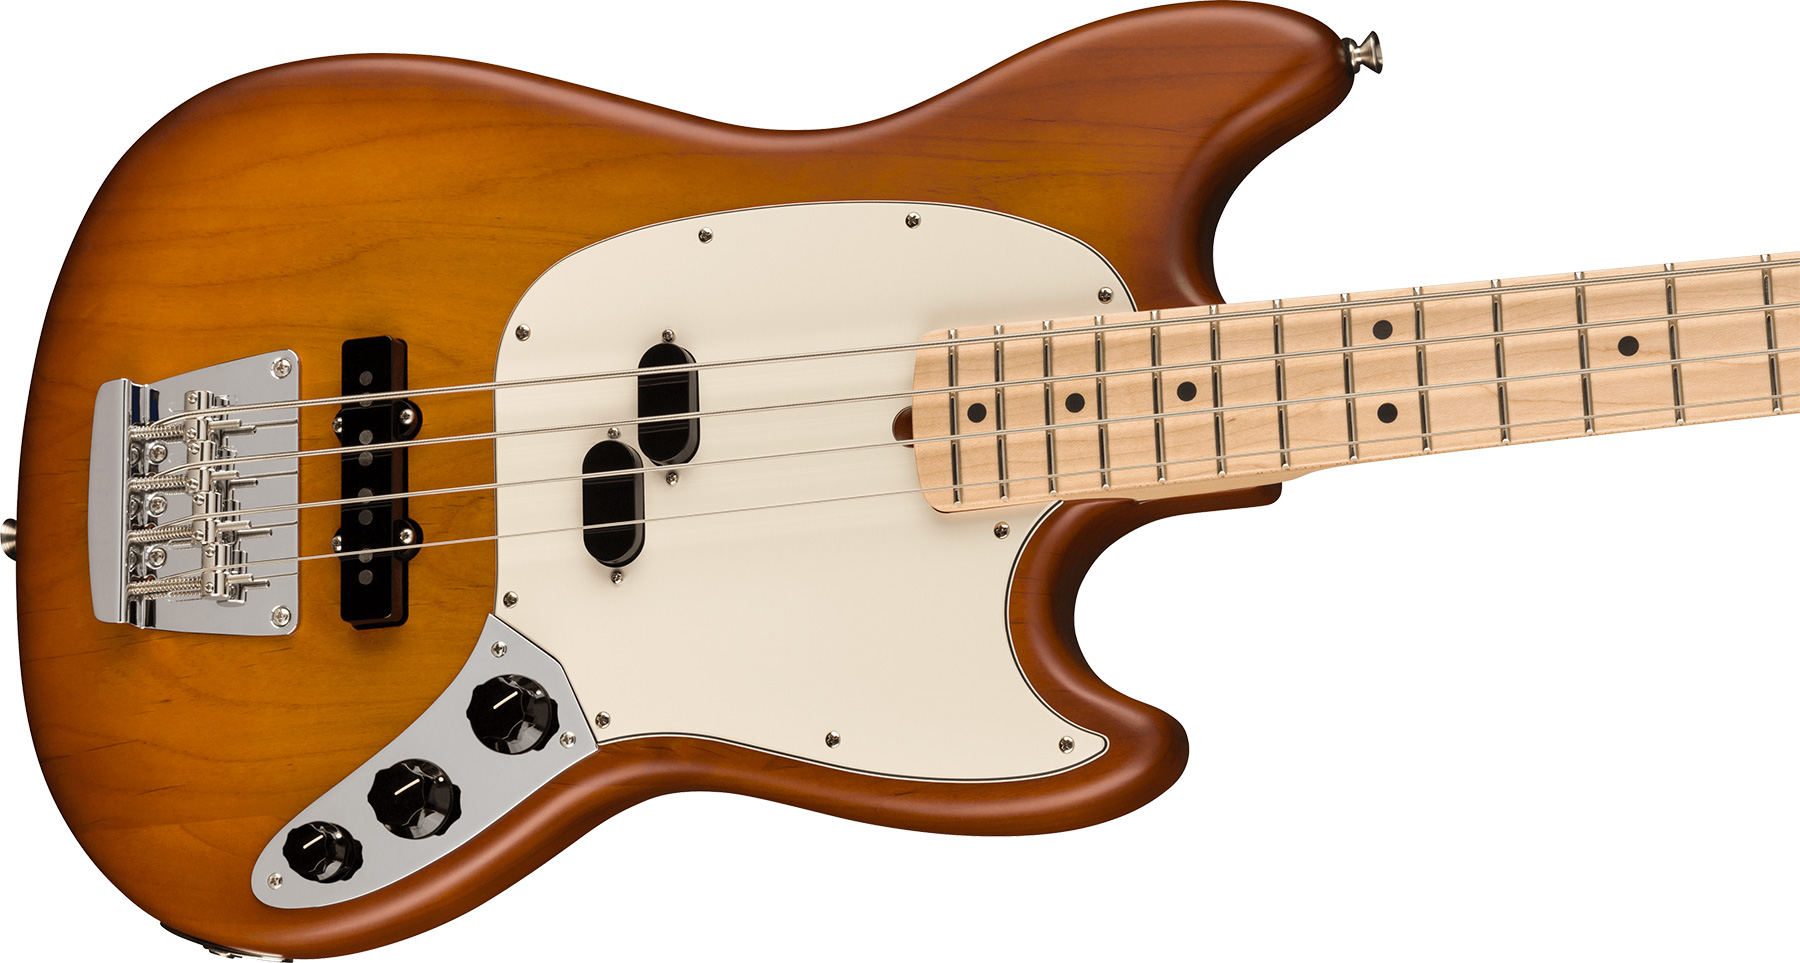 Fender Mustang Bass American Performer Ltd Usa Rw - Honey Burst Satin - Basse Électrique Solid Body - Variation 2